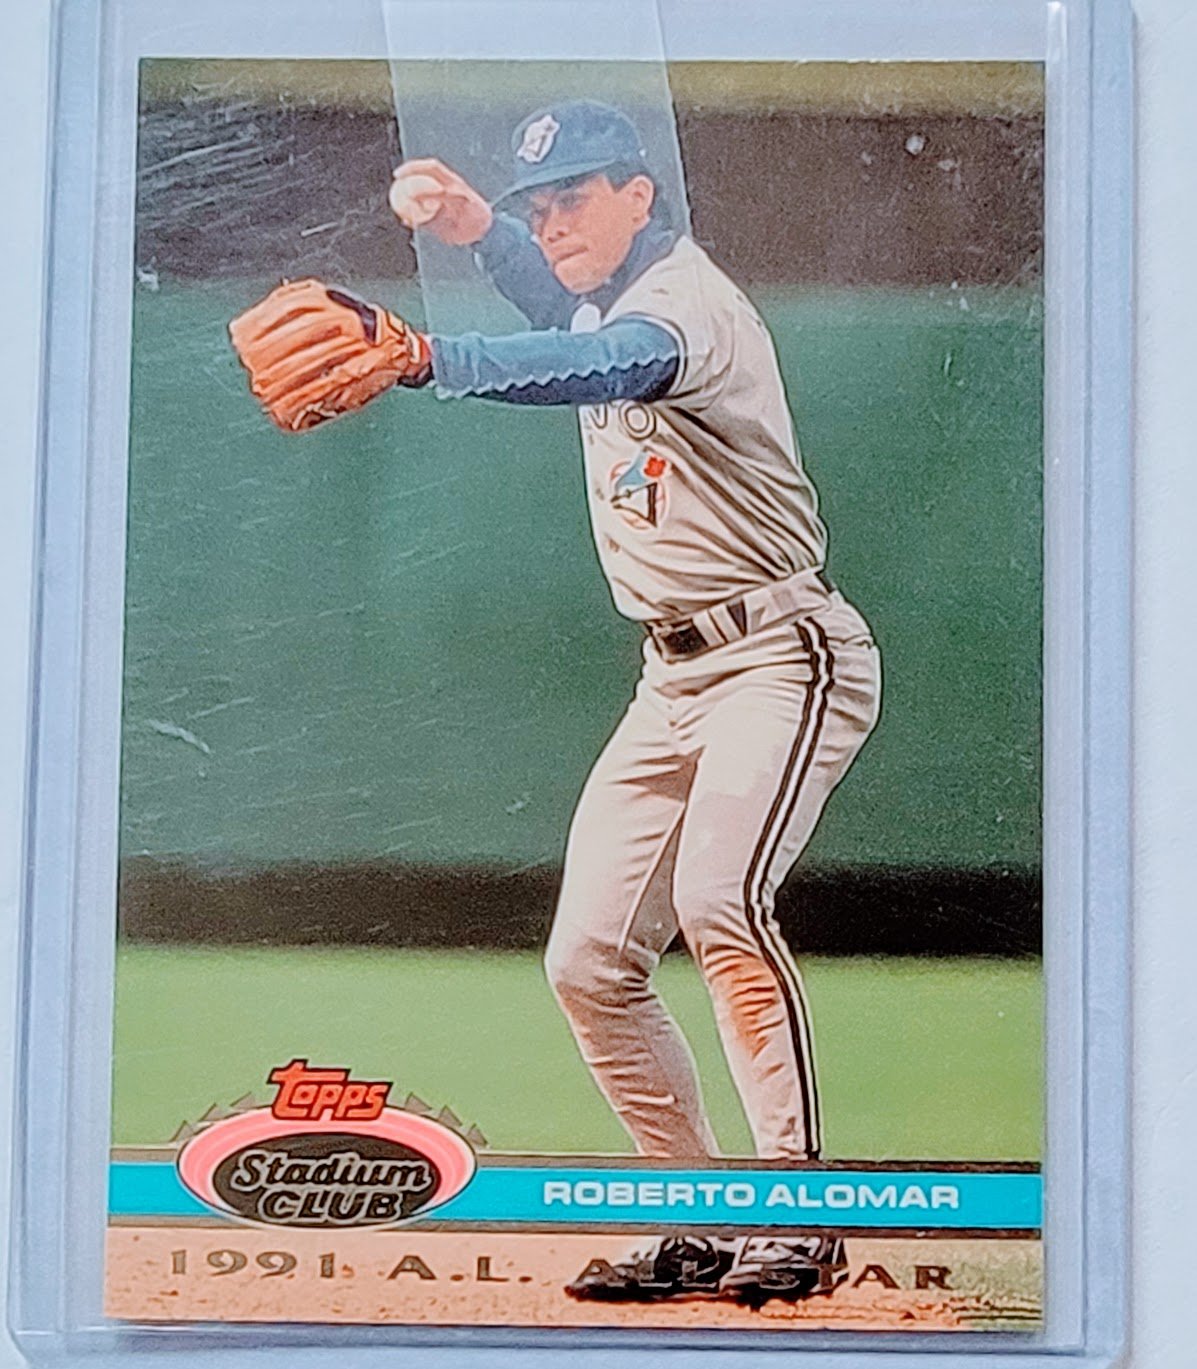 1992 Topps Stadium Club Dome Roberto Alomar 1991 All Star MLB Baseball Trading Card TPTV simple Xclusive Collectibles   